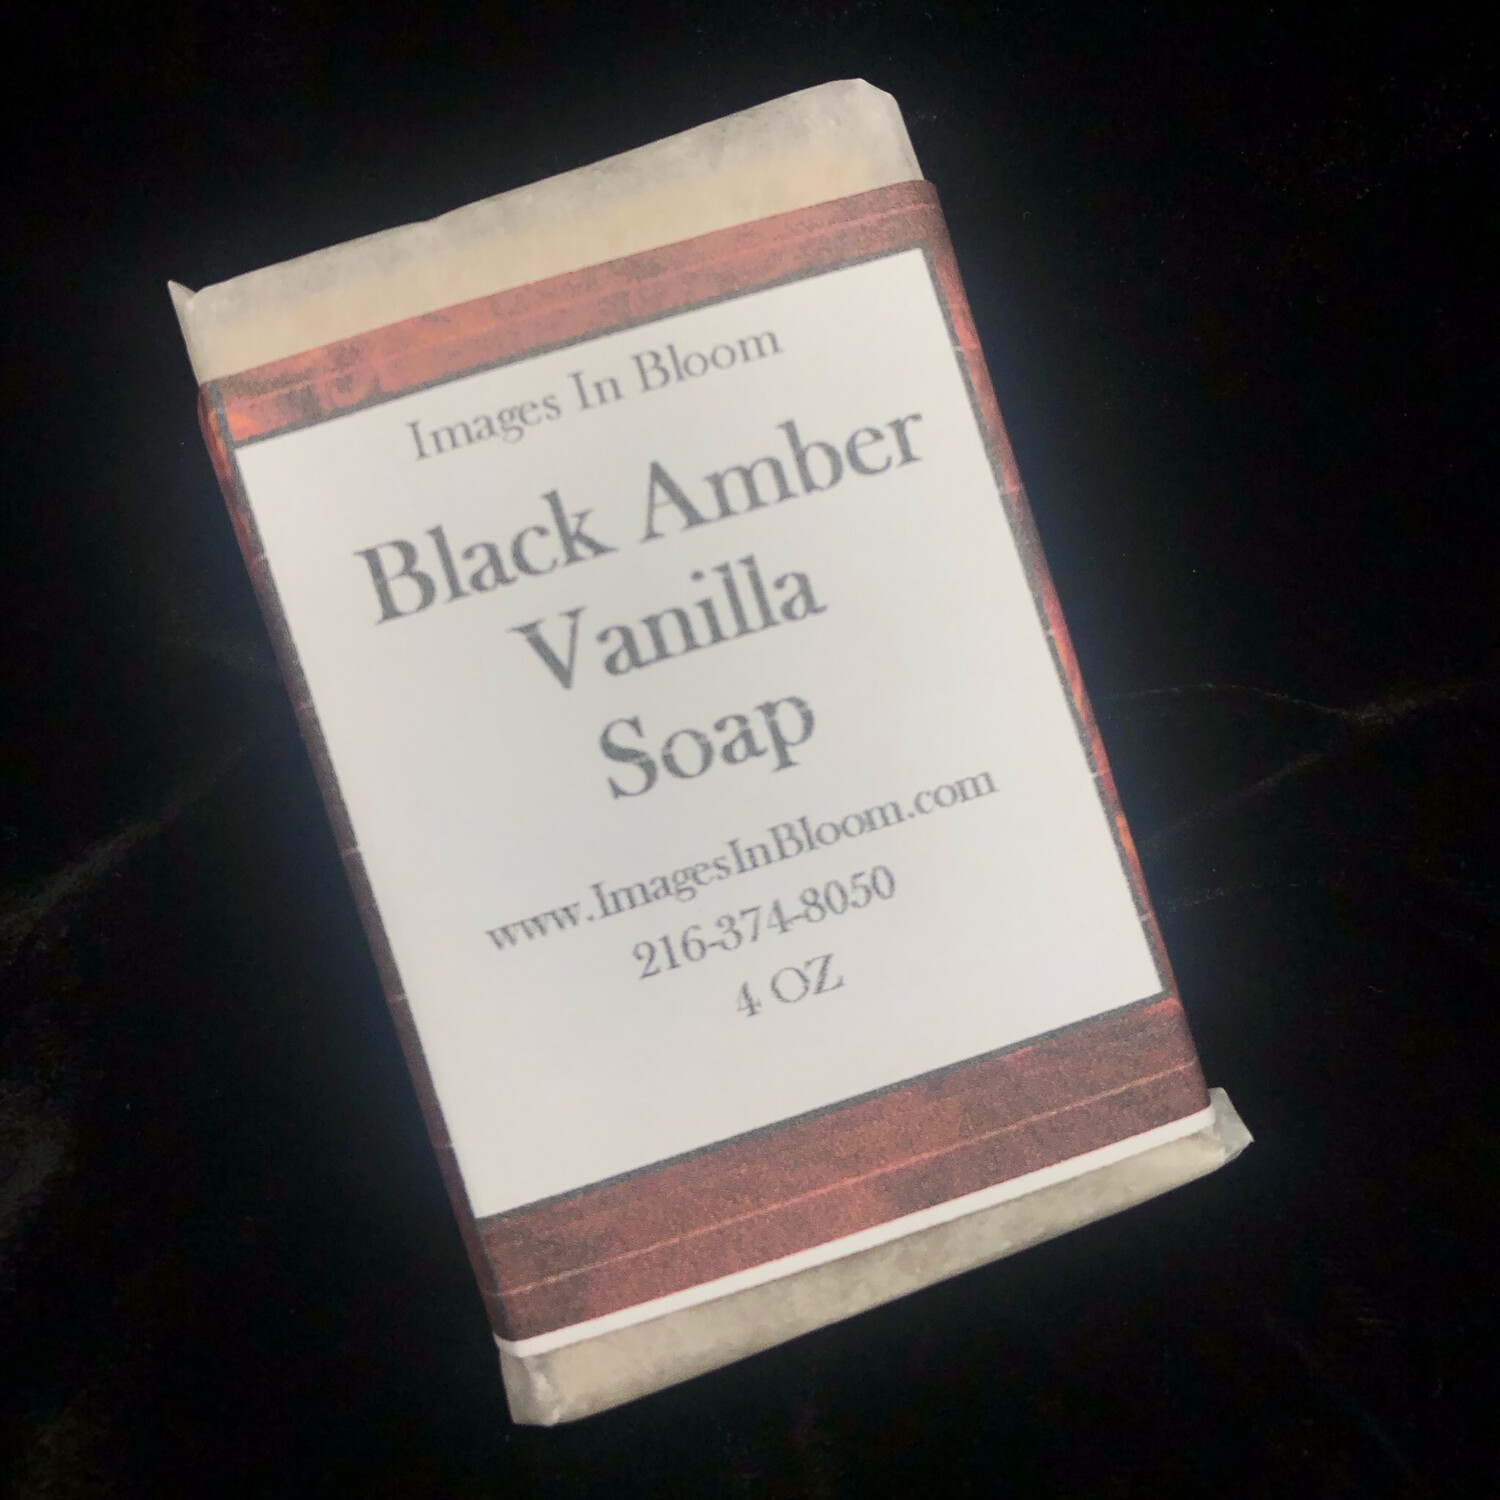 Black Amber Vanilla Soap